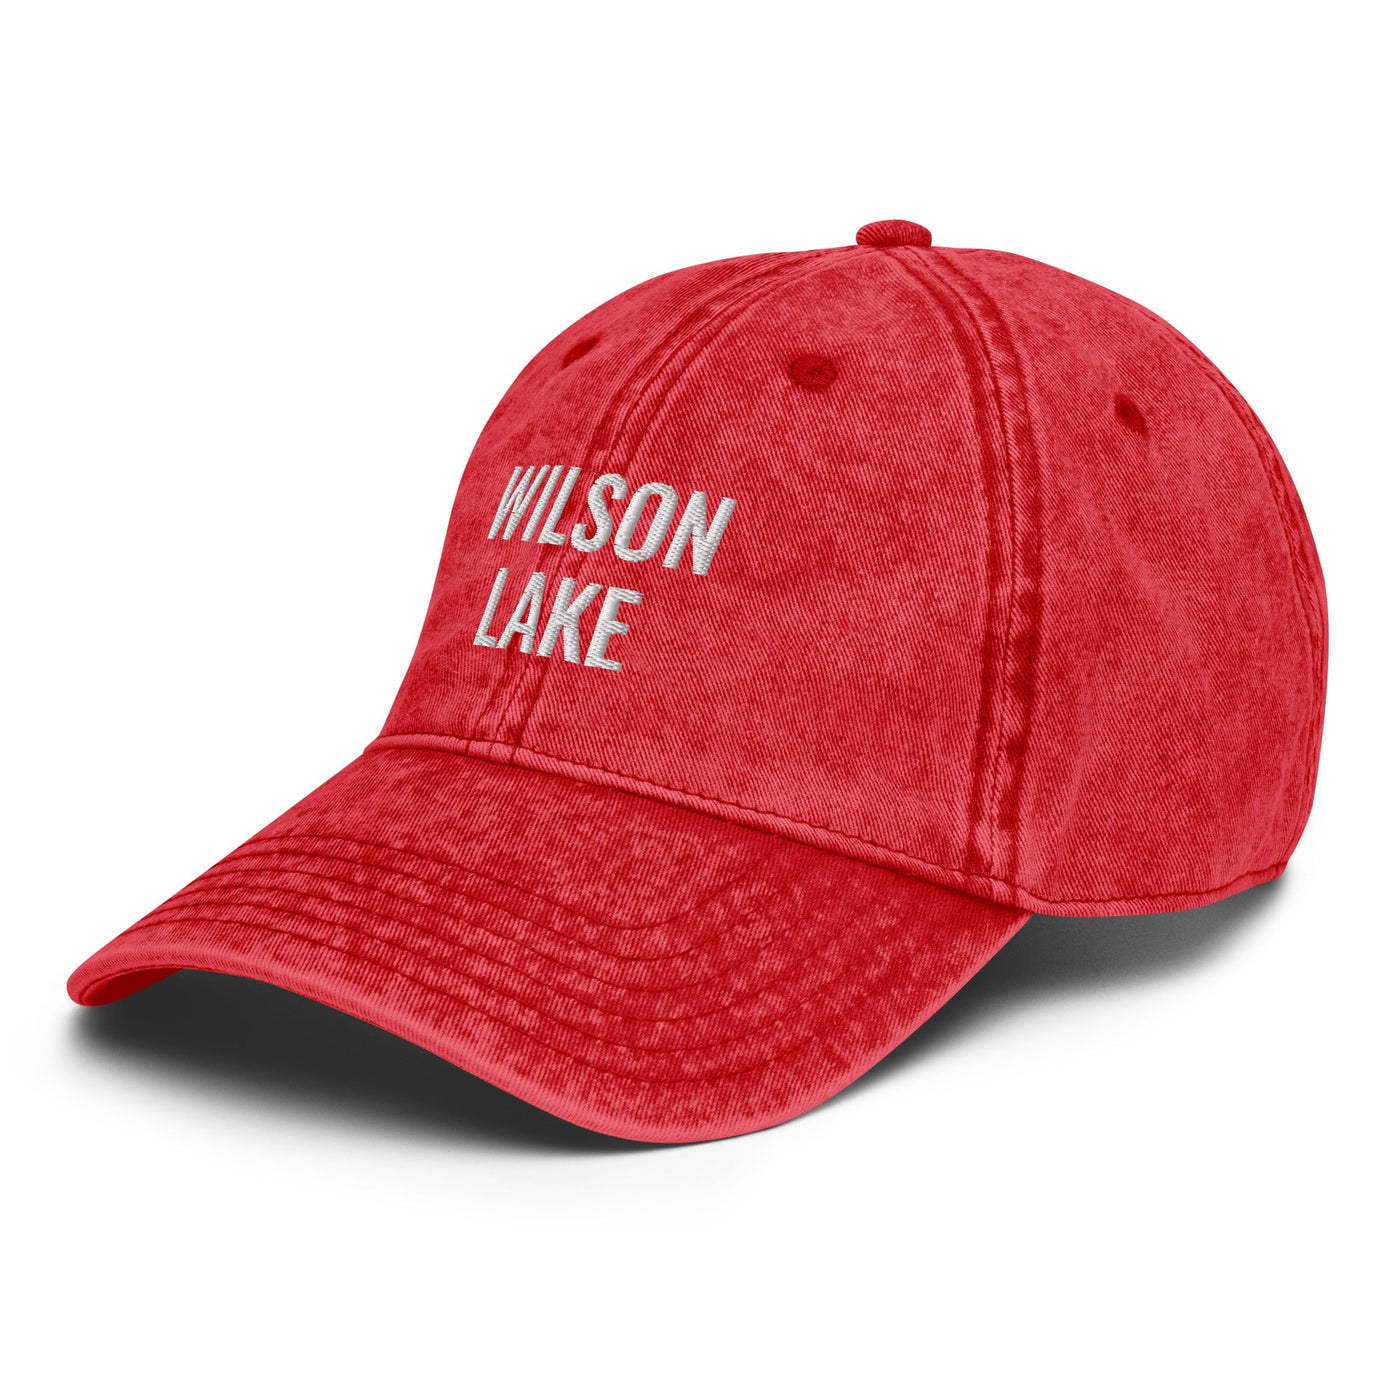 Wilson Lake Hat - Ezra's Clothing